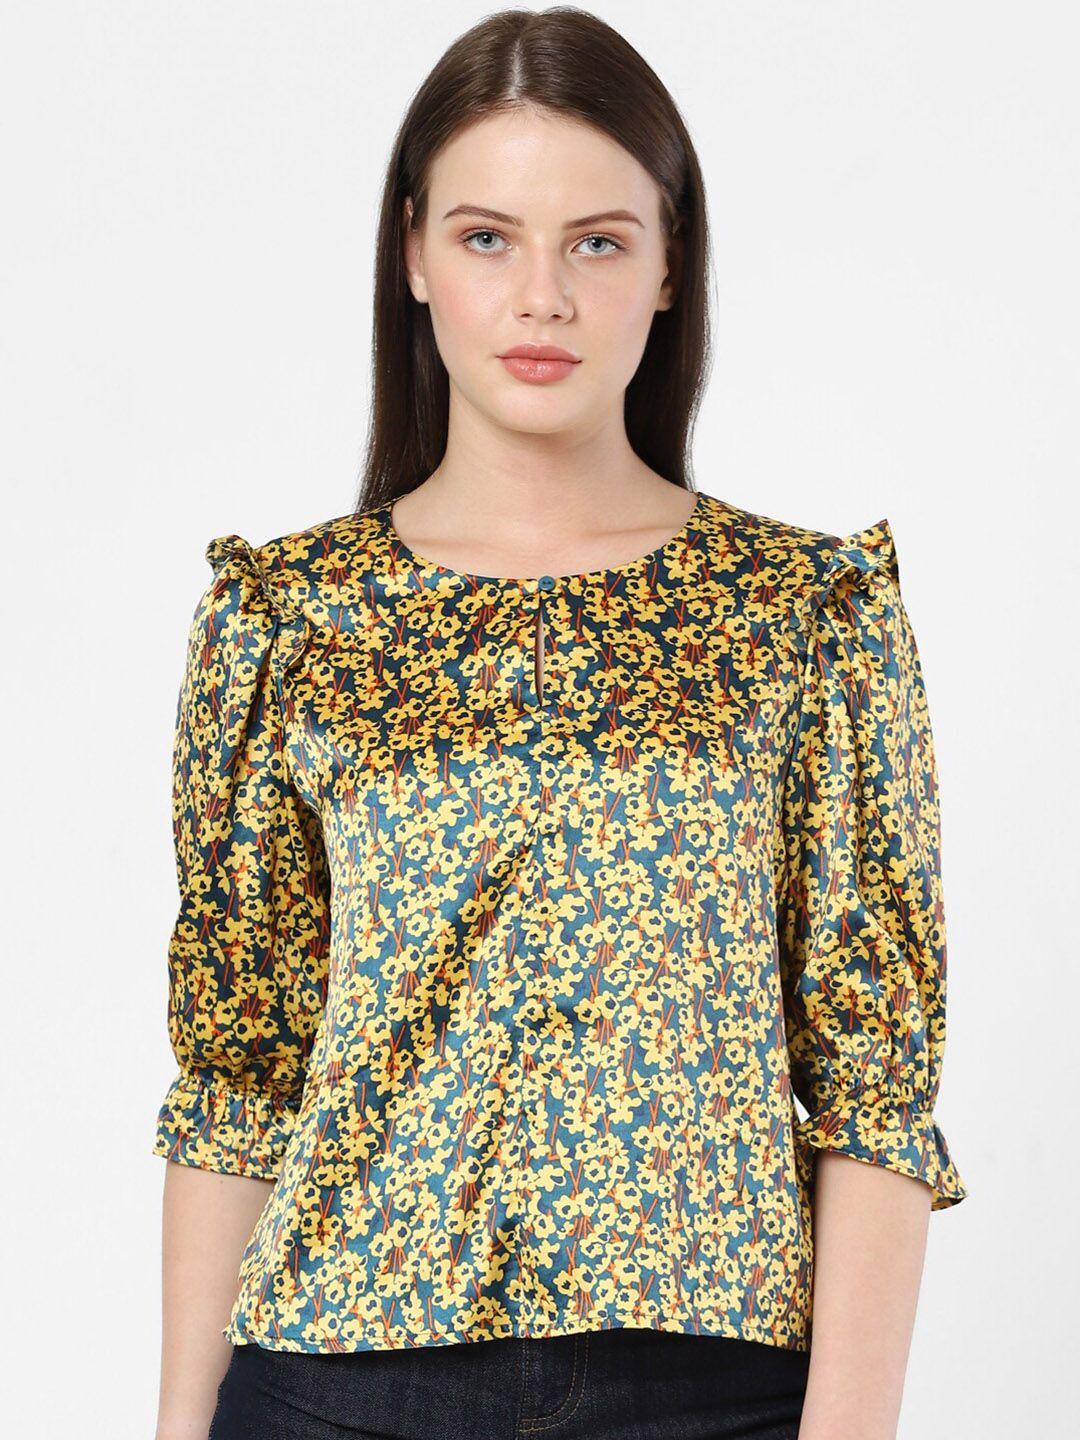 vero moda teal & yellow floral printed top